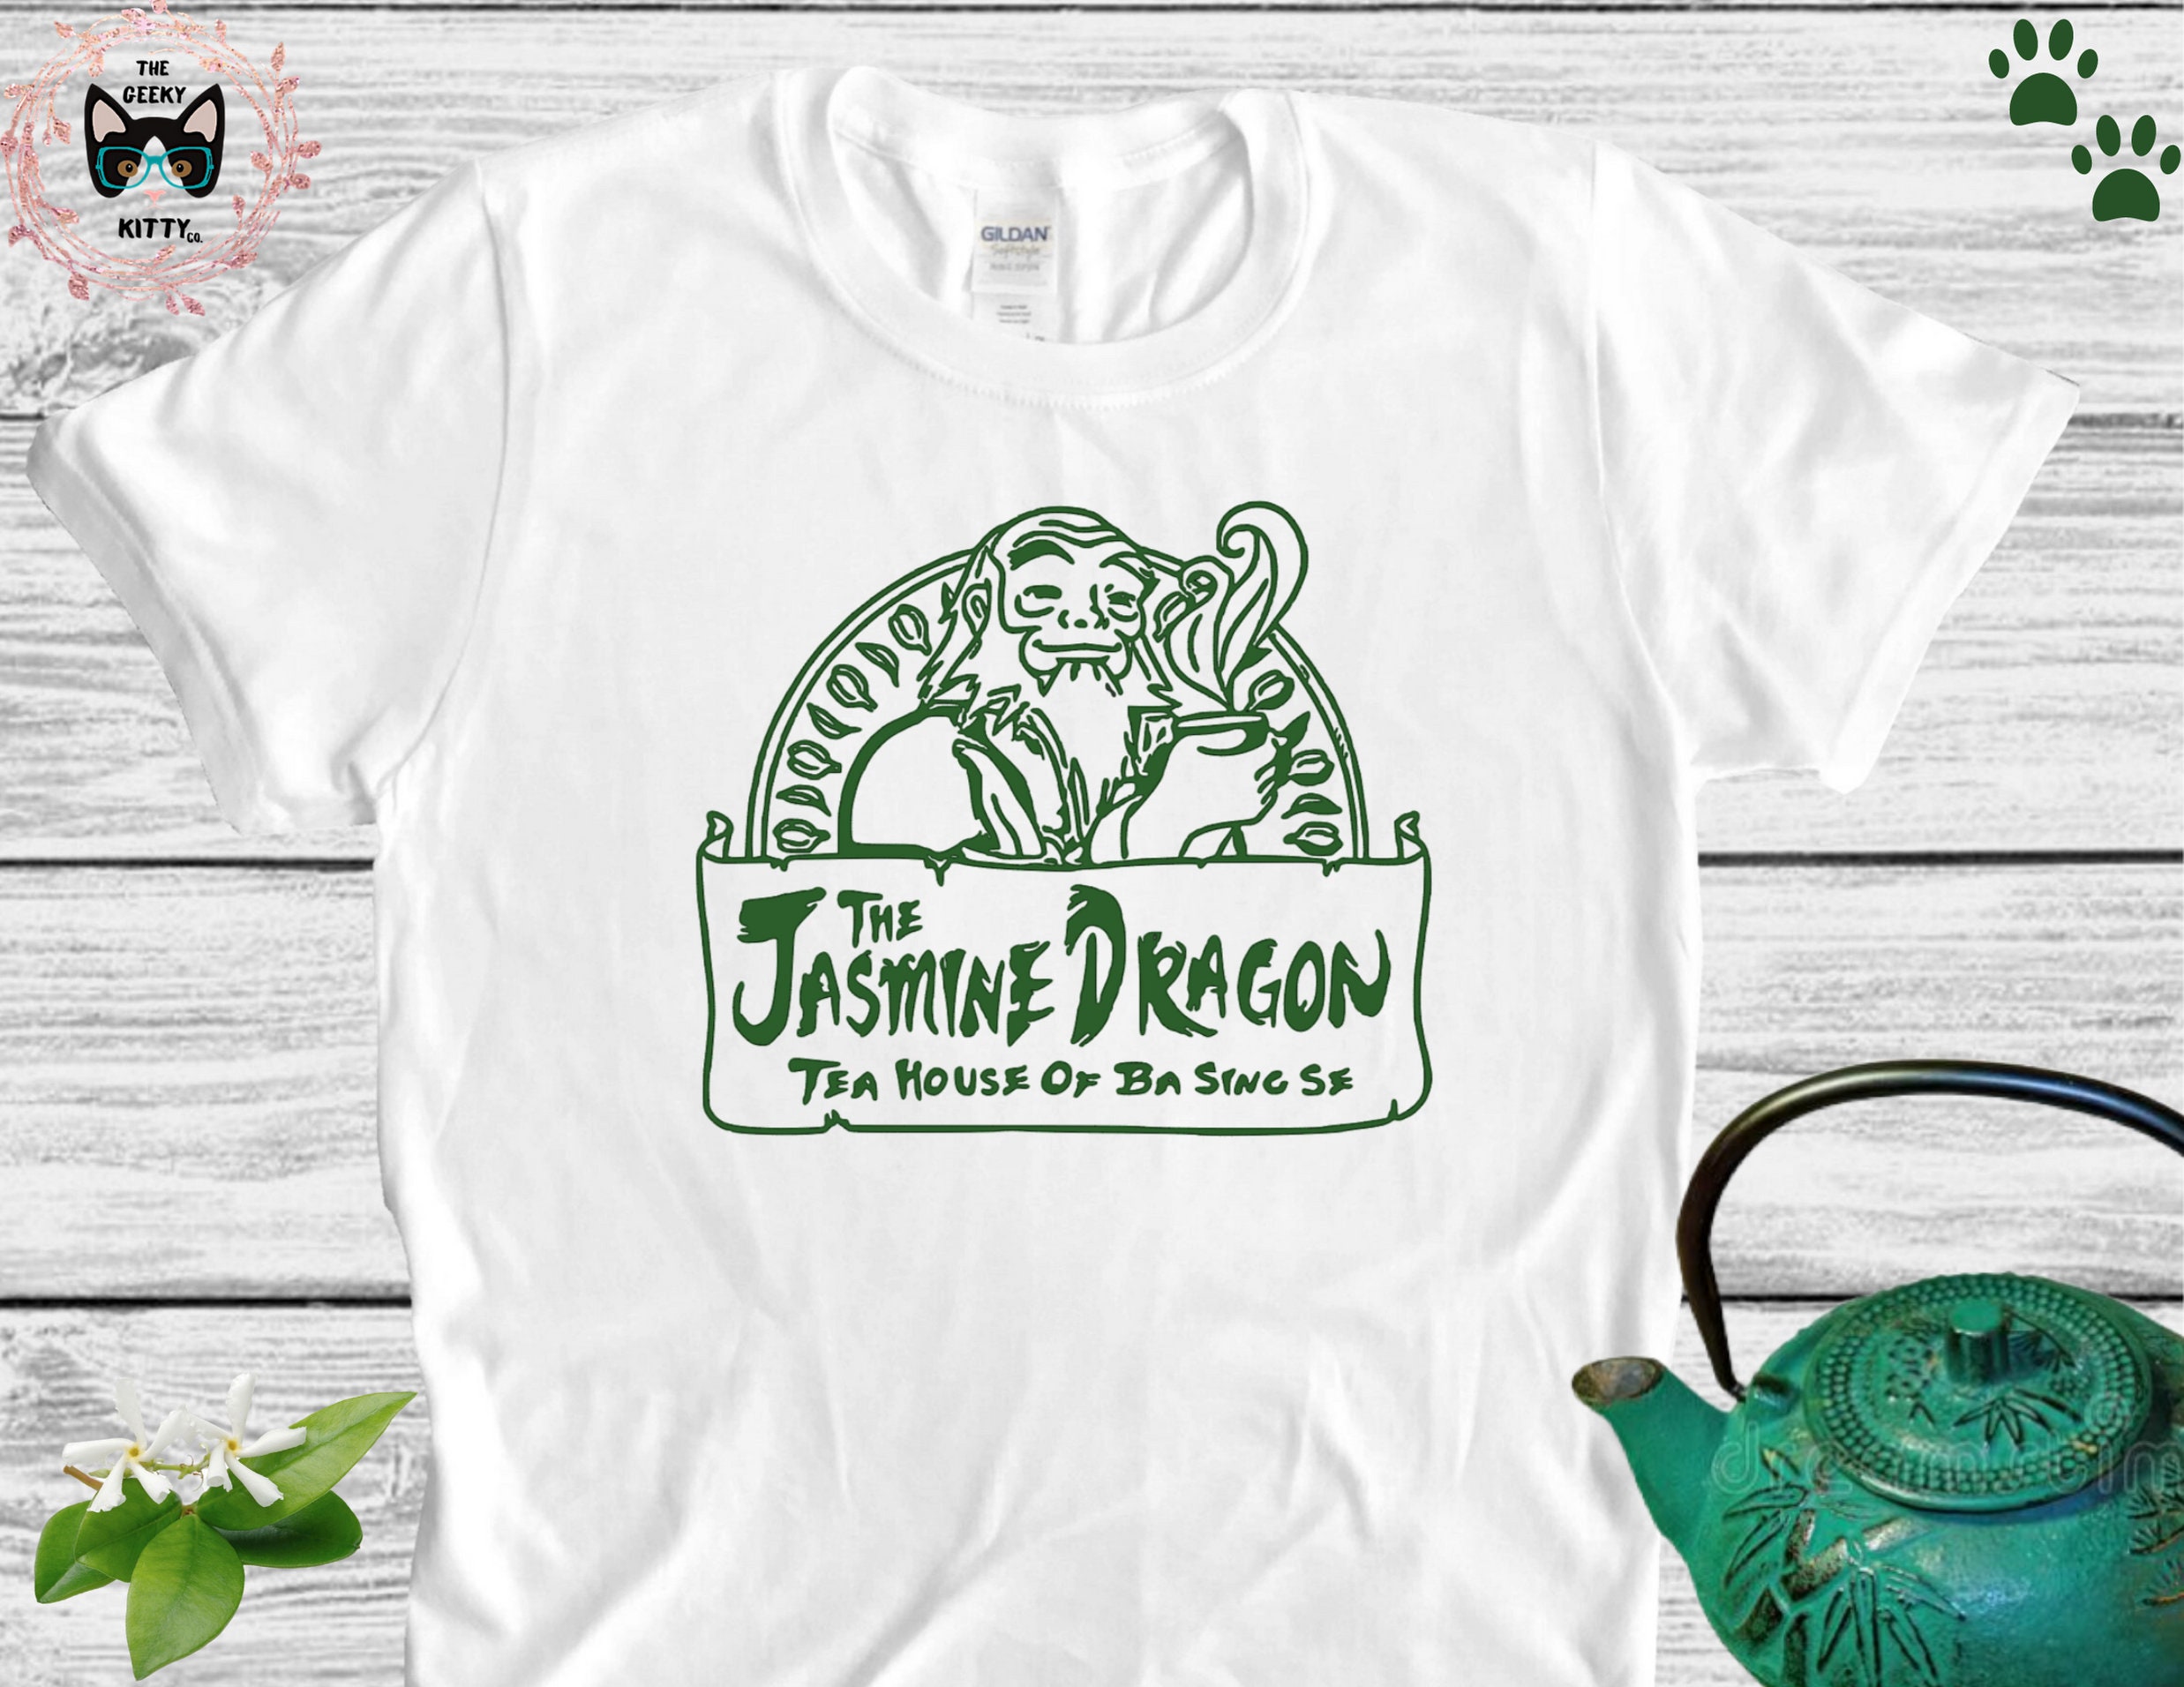 Unisex T-Shirt The Jasmine Dragon Tea House Shirts For Men Women Cool T Shirts 